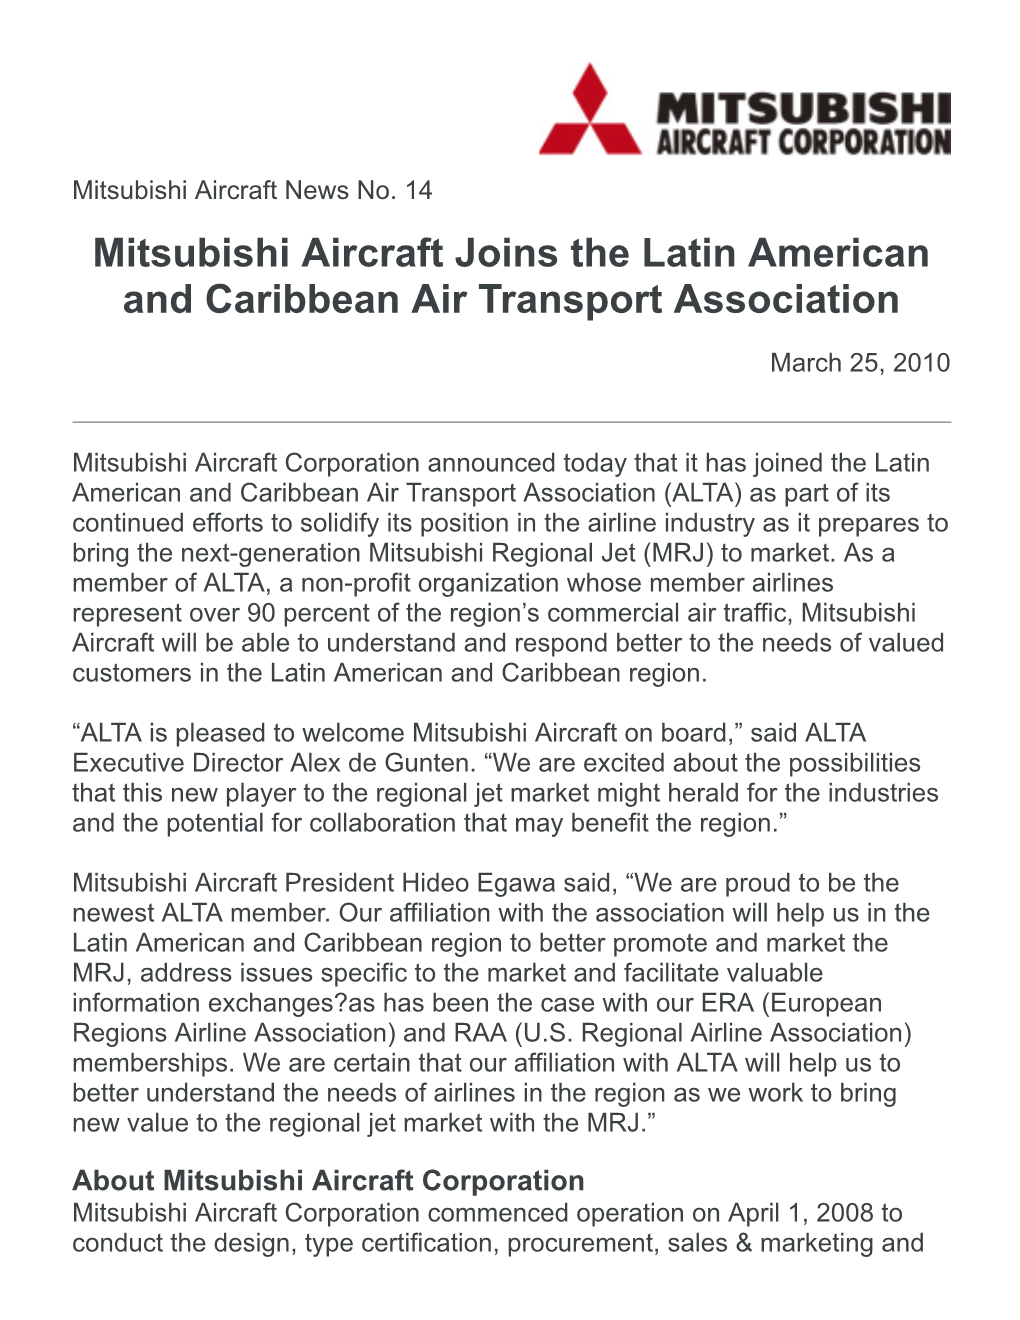 Mitsubishi Aircraft Joins the Latin American and Caribbean Air Transport Association